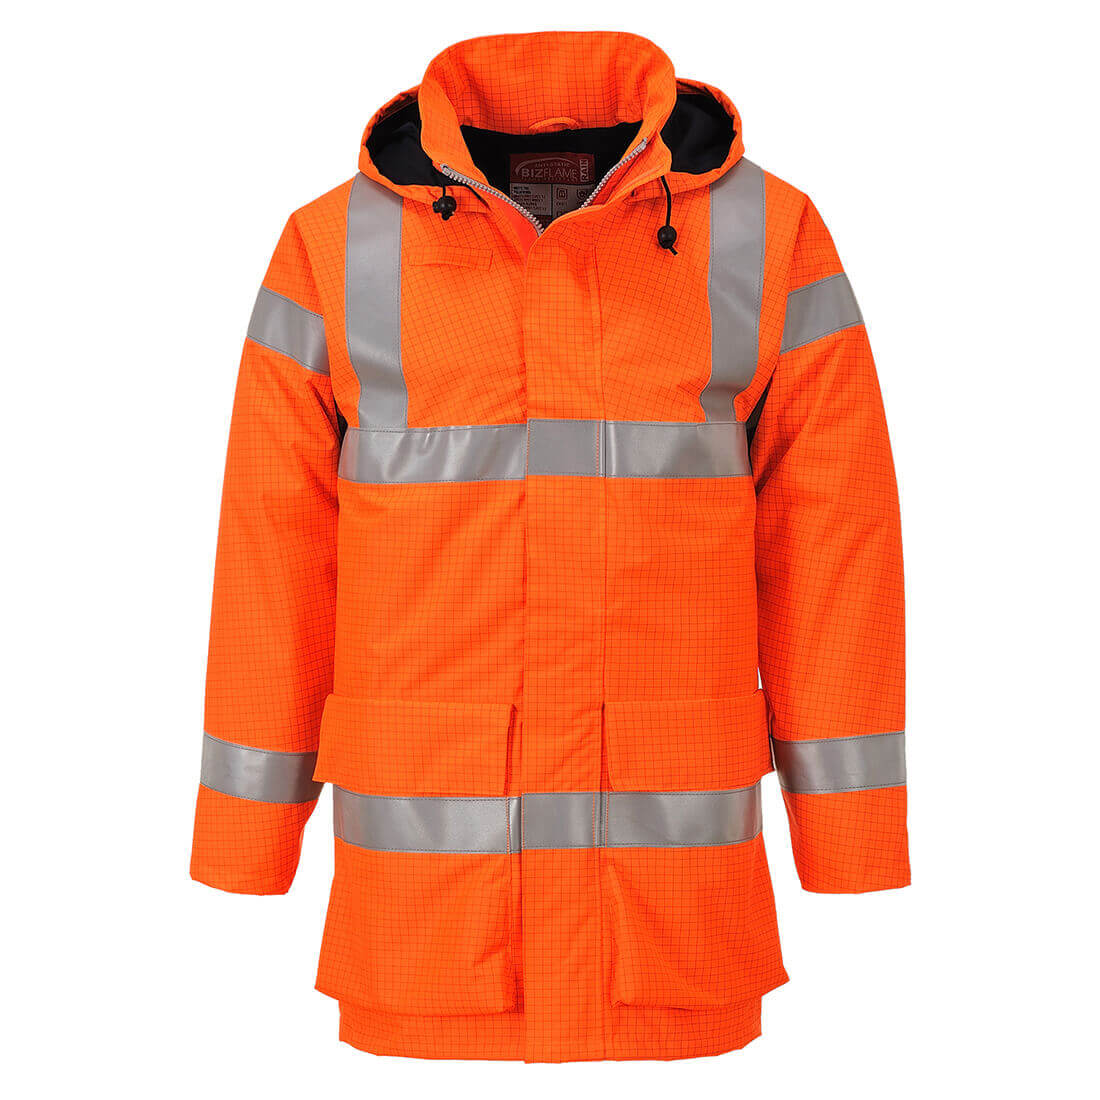 Image of Biz Flame Hi Vis Flame Resistant Rain Multi Lite Jacket Orange 2XL